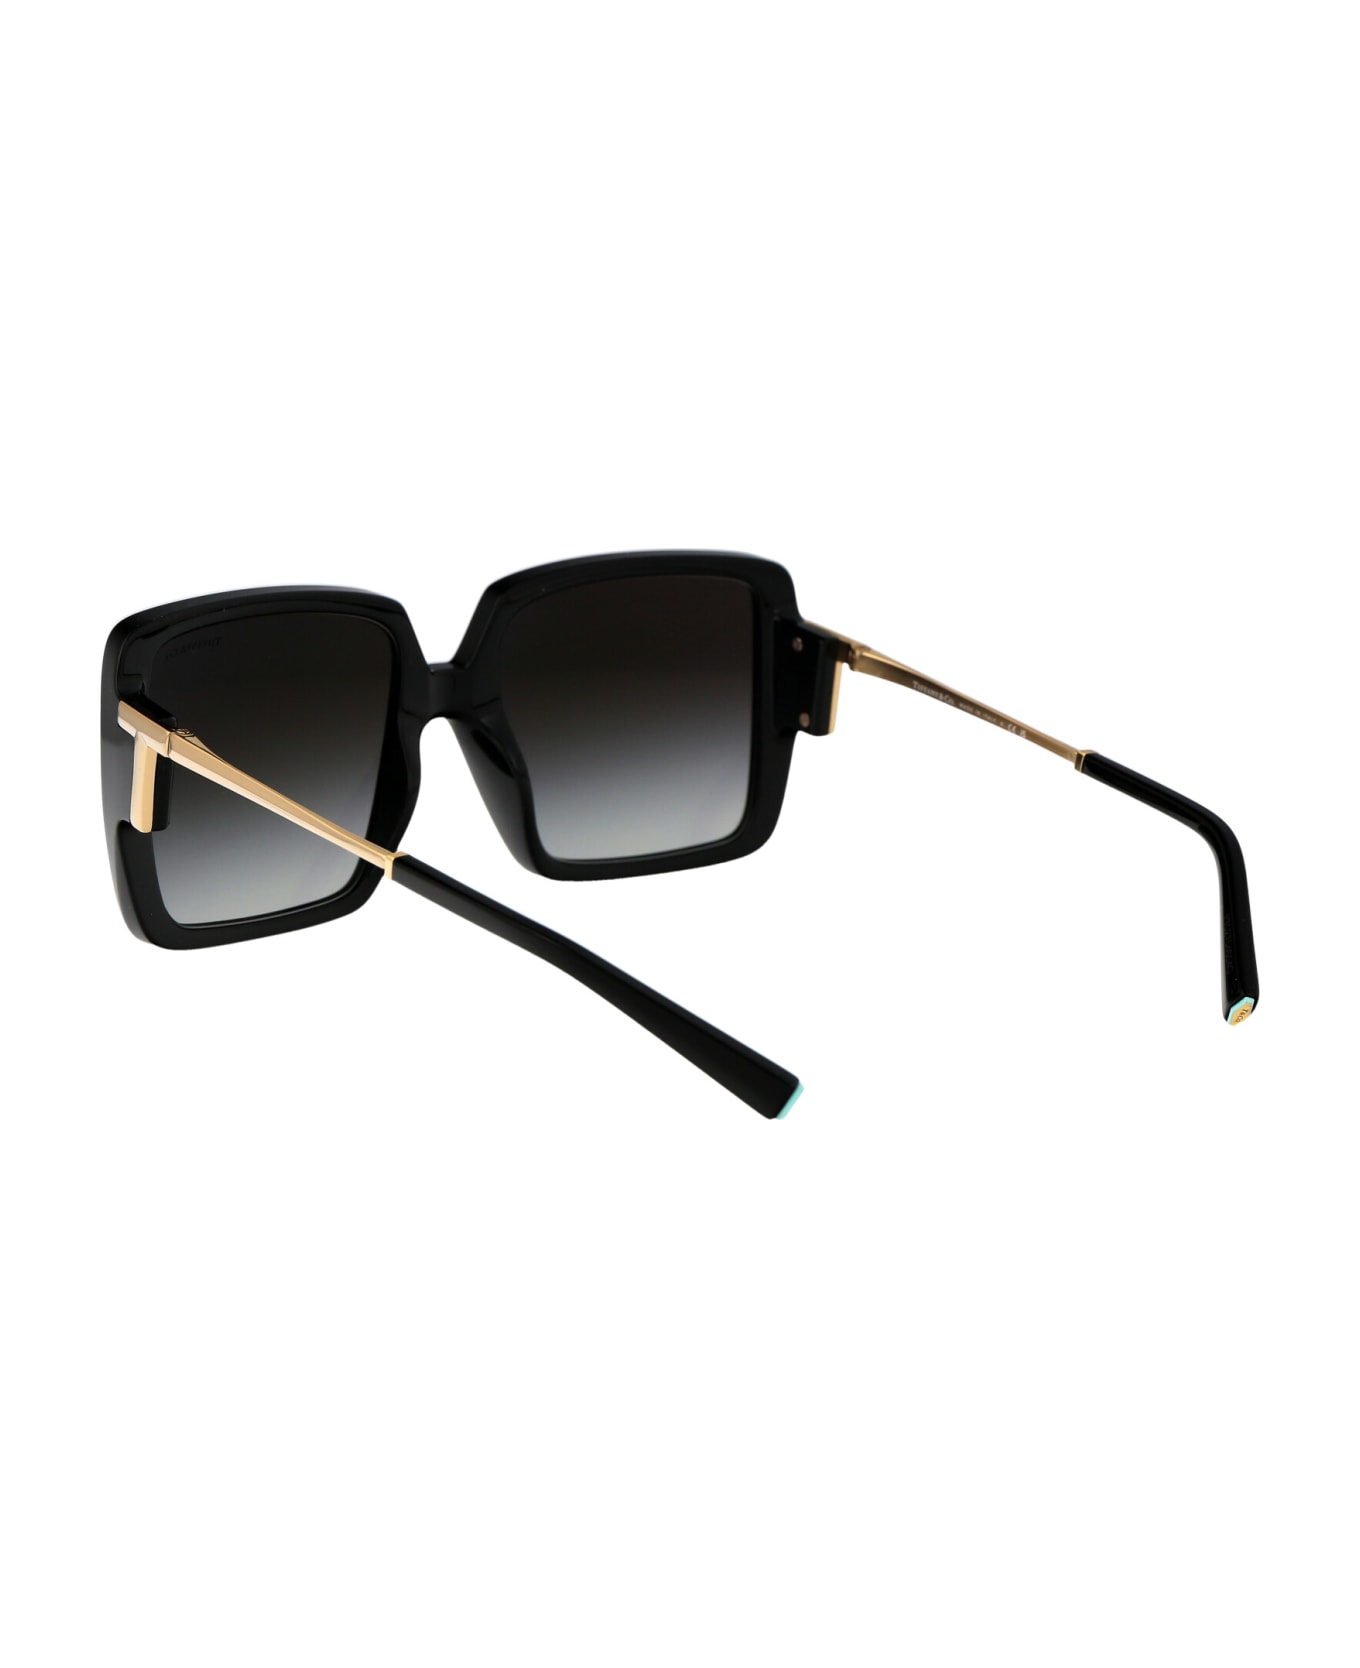 Tiffany & Co. 0tf4212u Sunglasses - 80013C Black